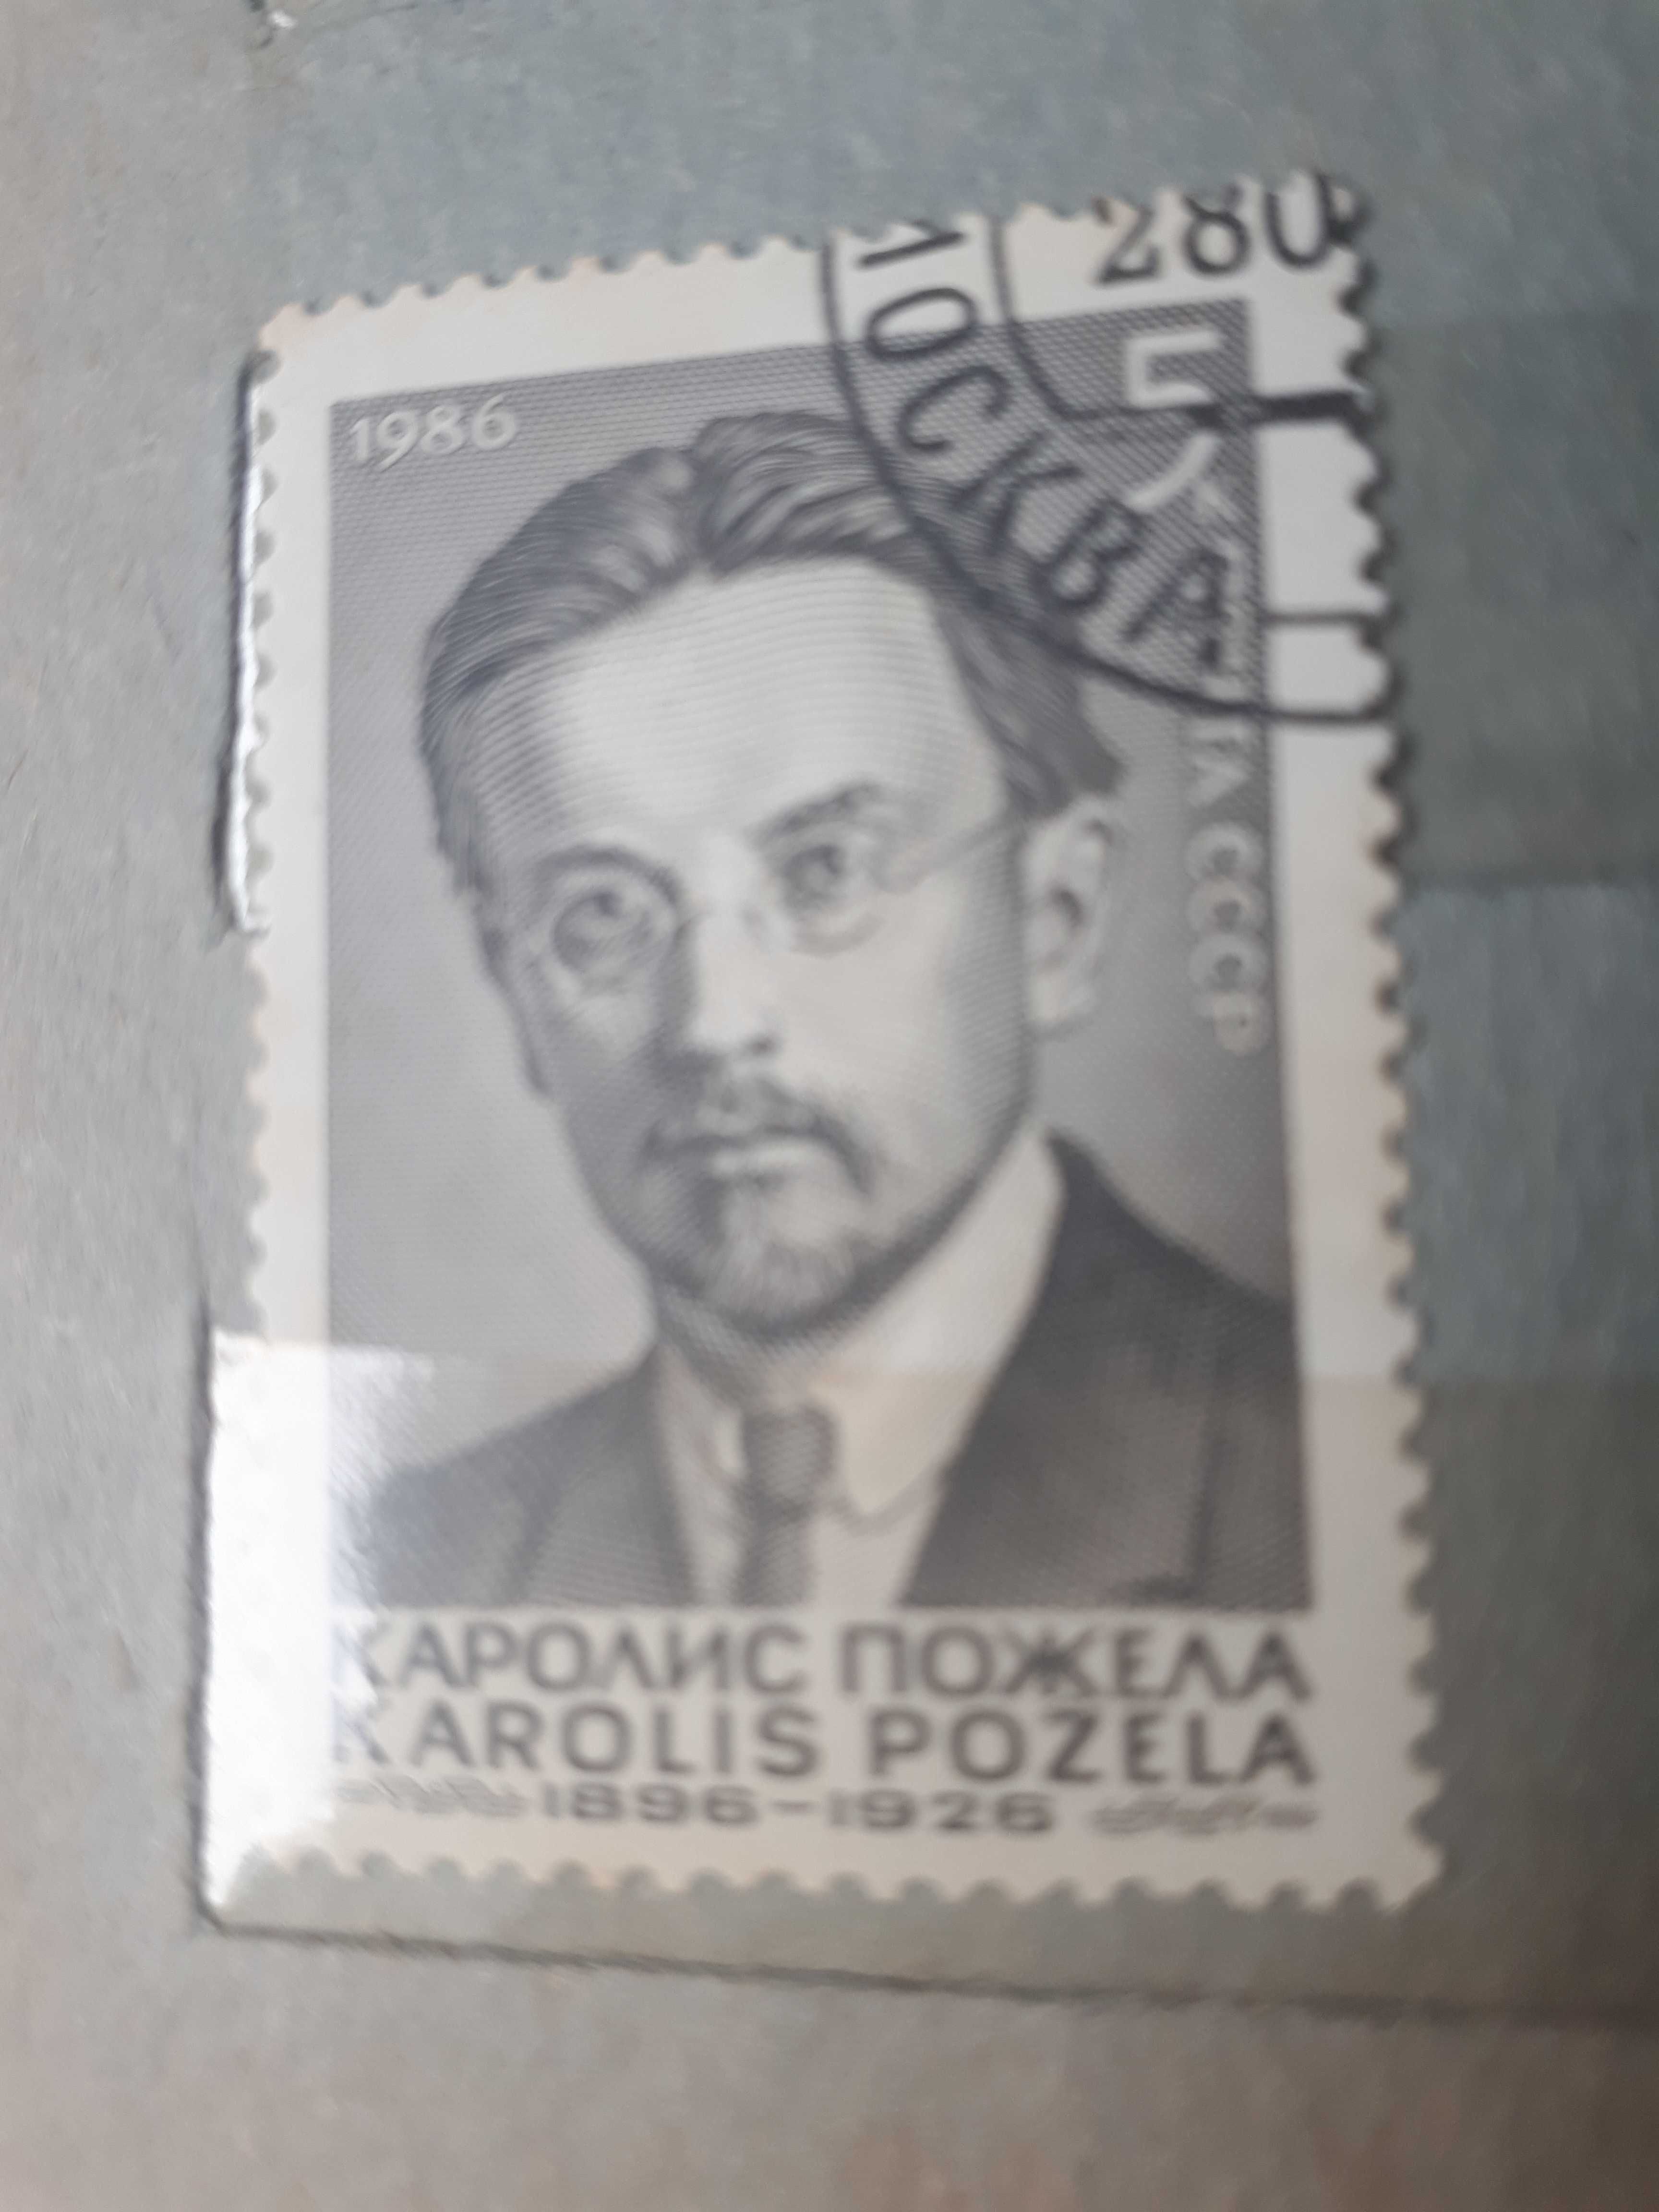 марки советские редкие